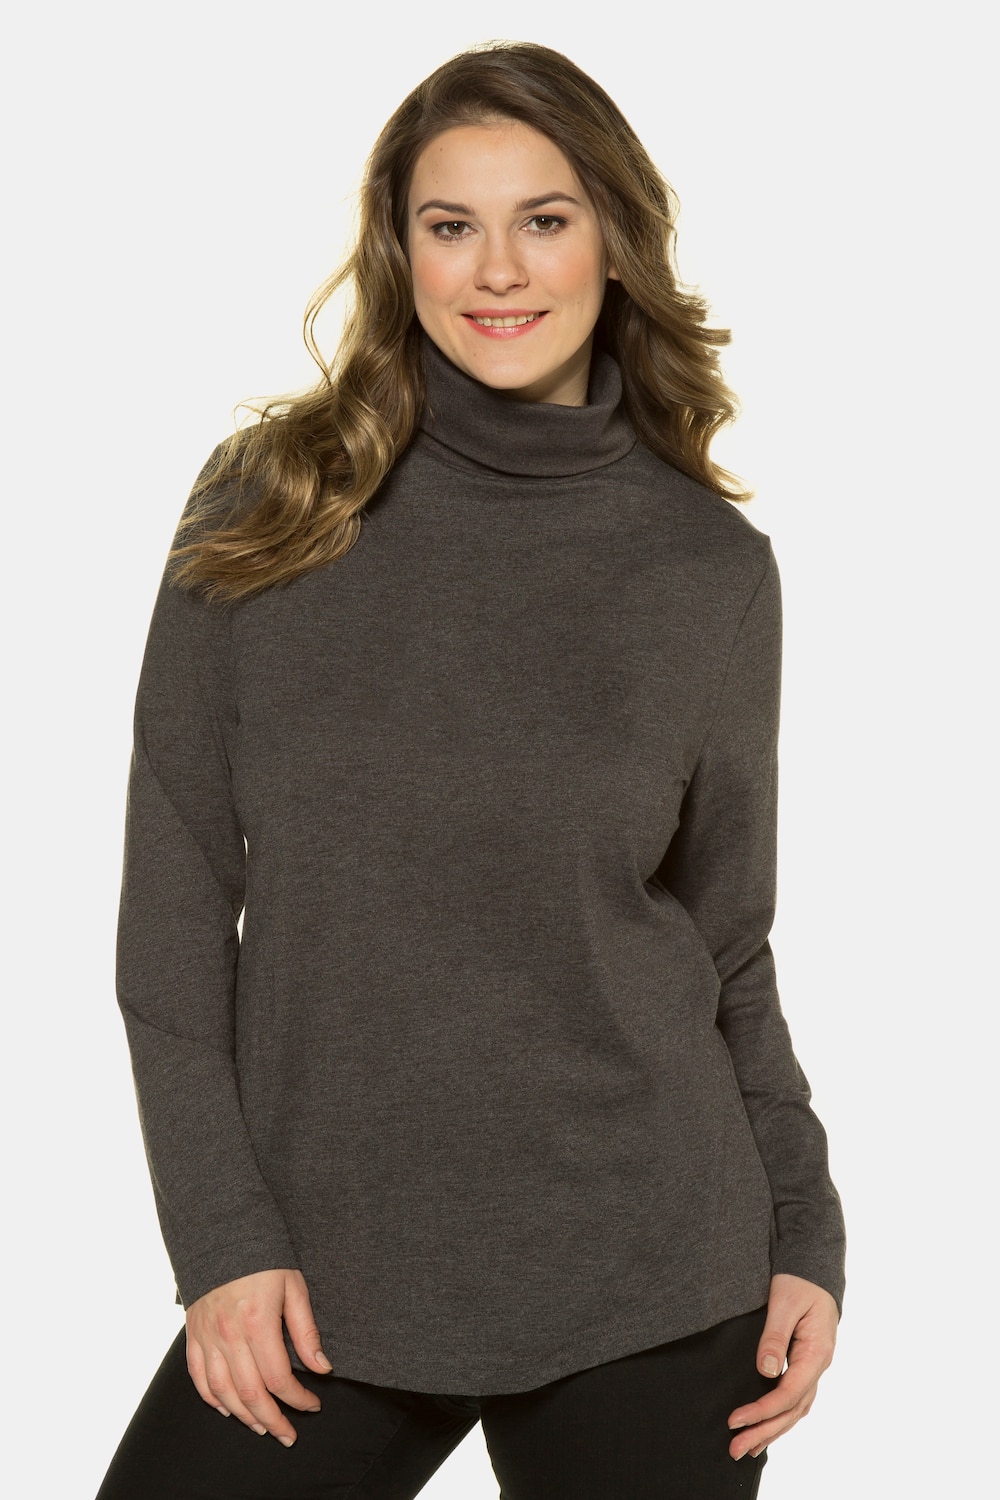 Plus Size Basic Long Sleeve Slim Fit Turtleneck, Woman, black, size: 16/18, Ulla Popken